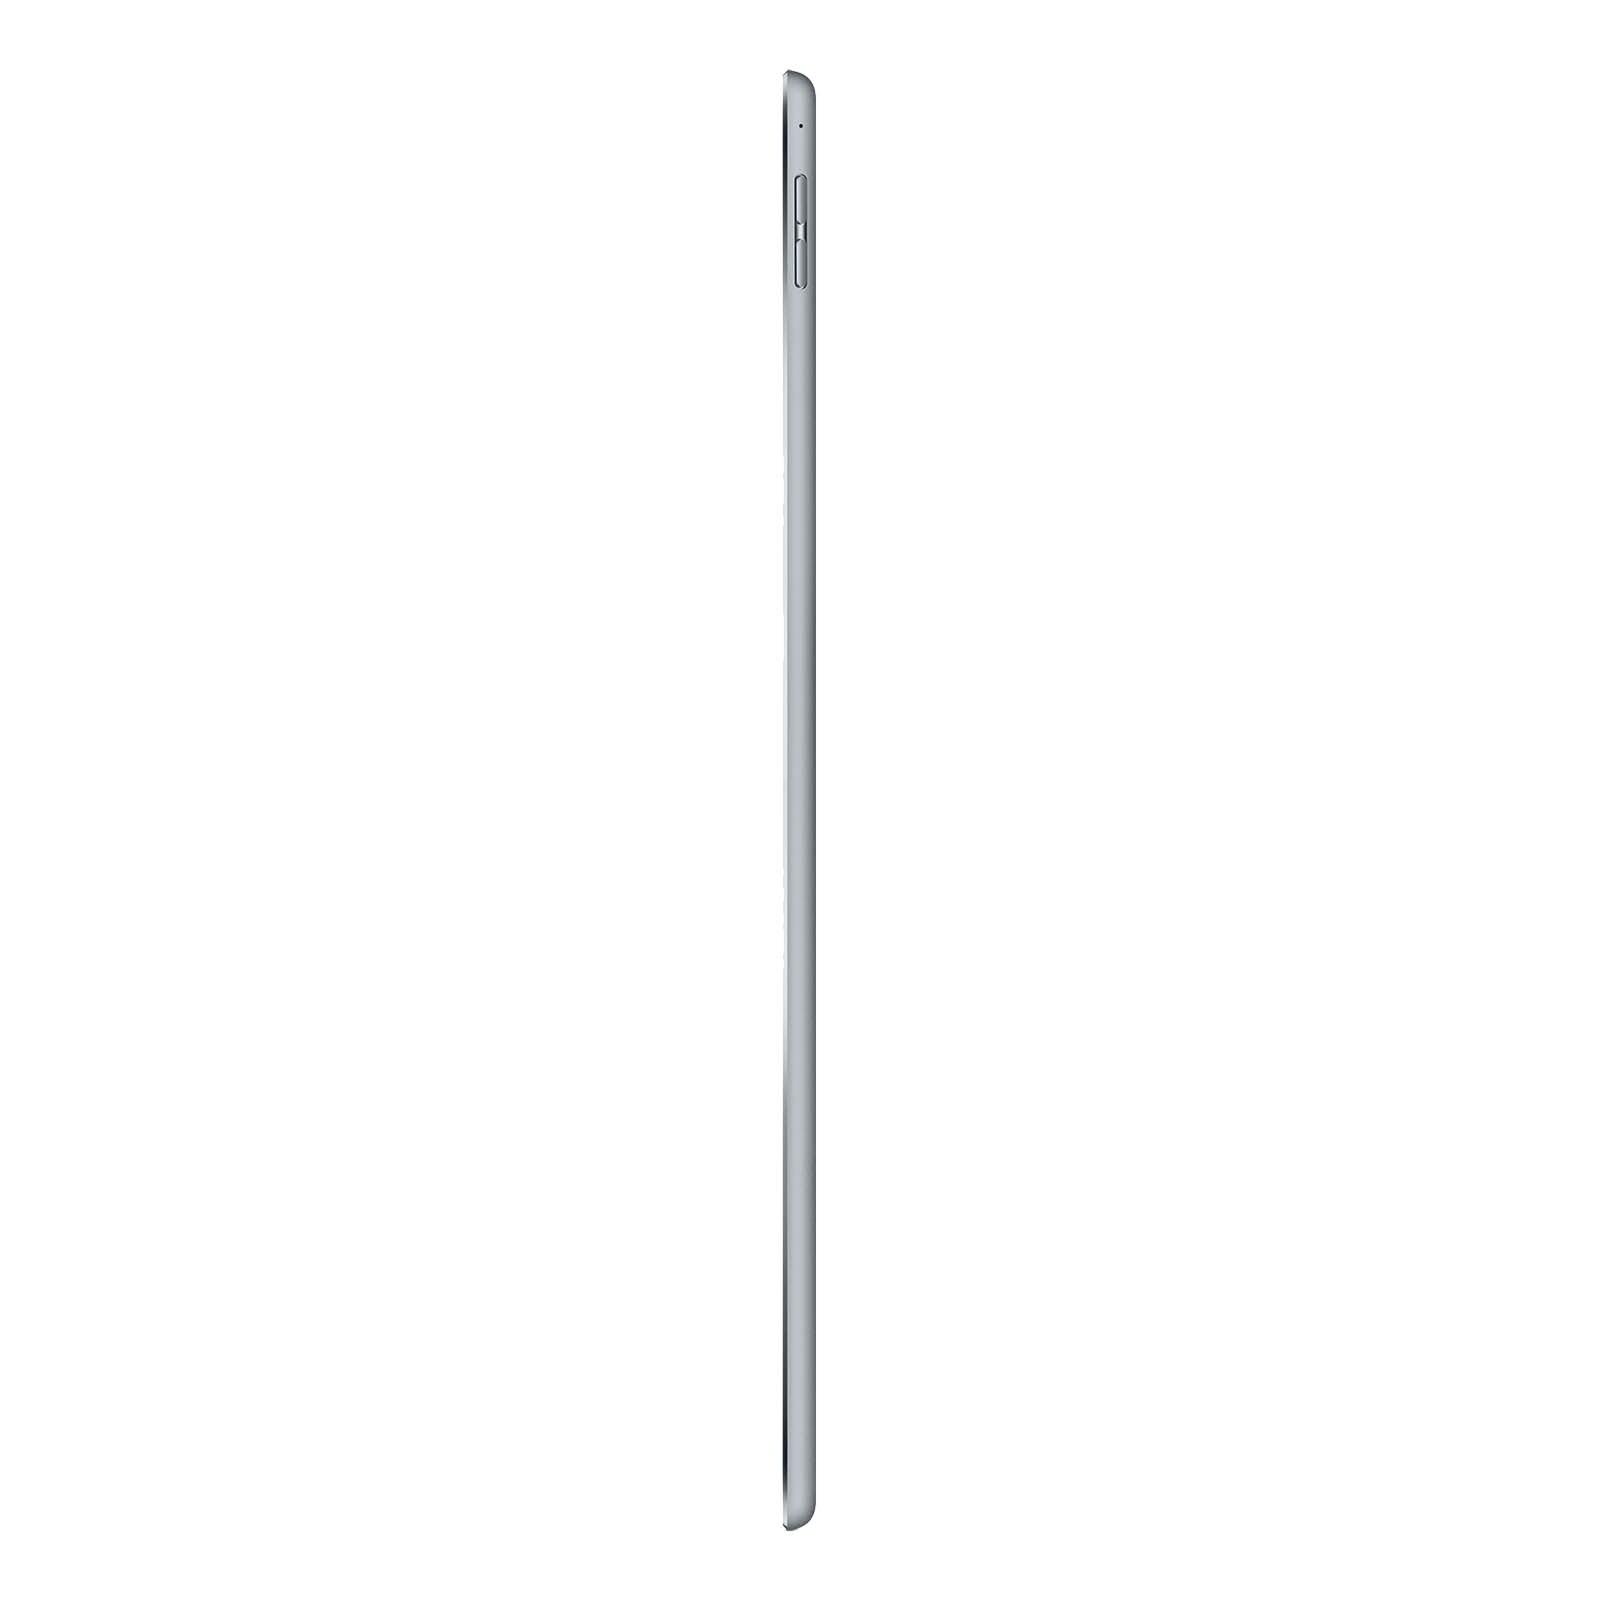 Apple iPad Pro 12.9 3rd Gen 512GB Cellular Space Grey - Good